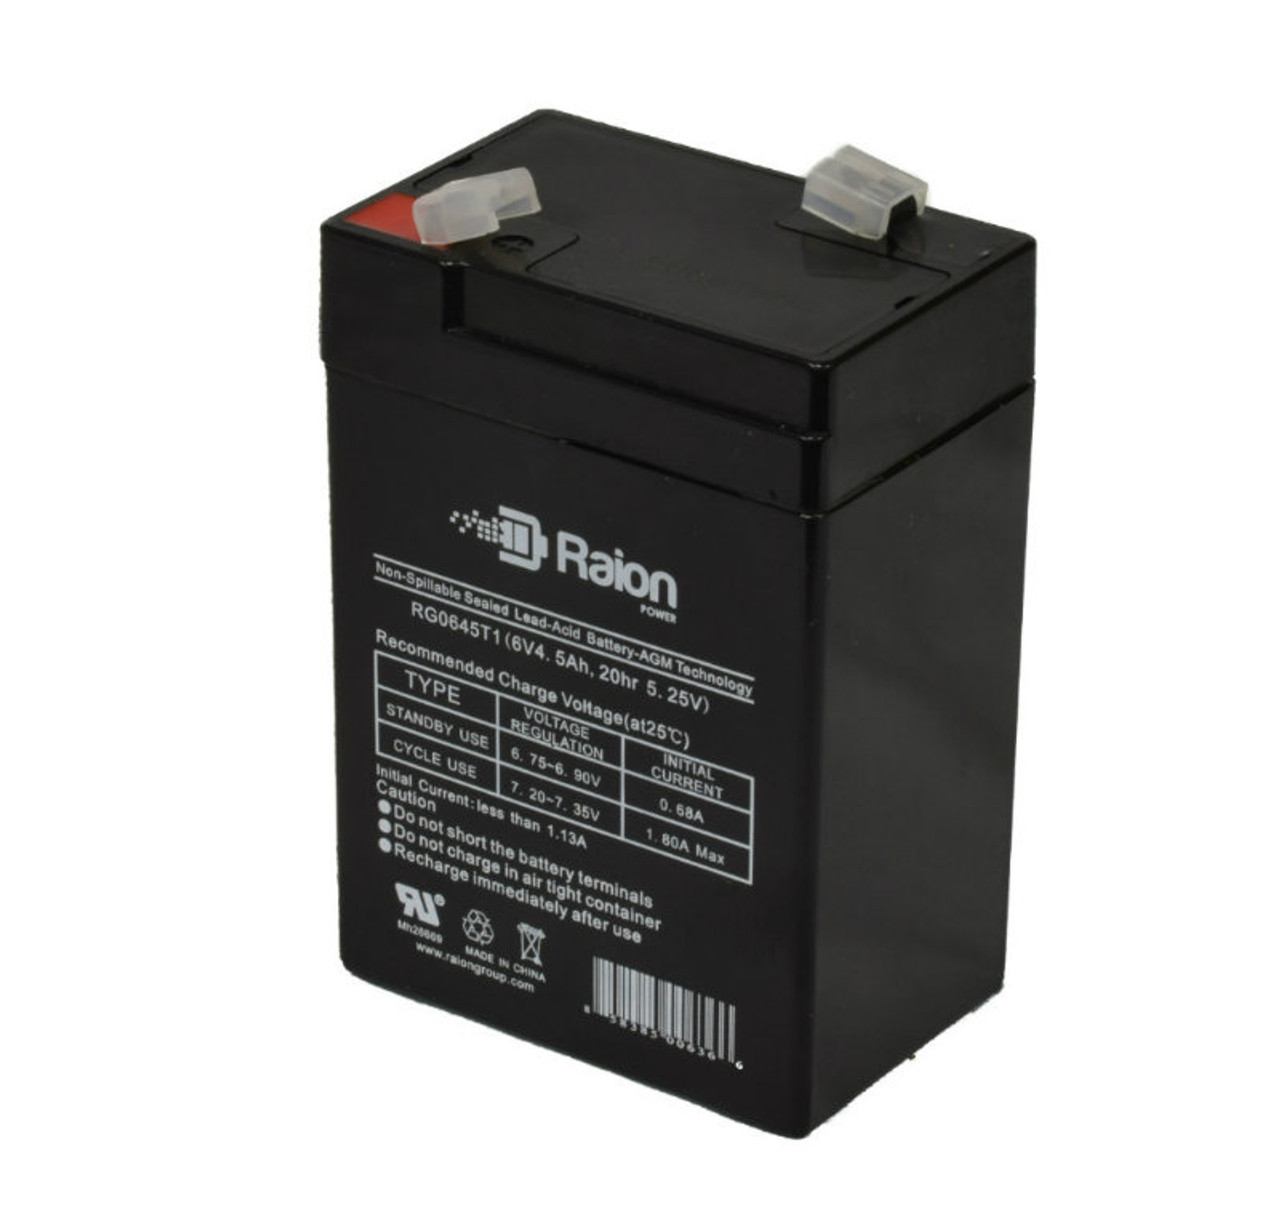 Raion Power RG0645T1 6V 4.5Ah Replacement Battery Cartridge for BPOWER BPE 4.5-6